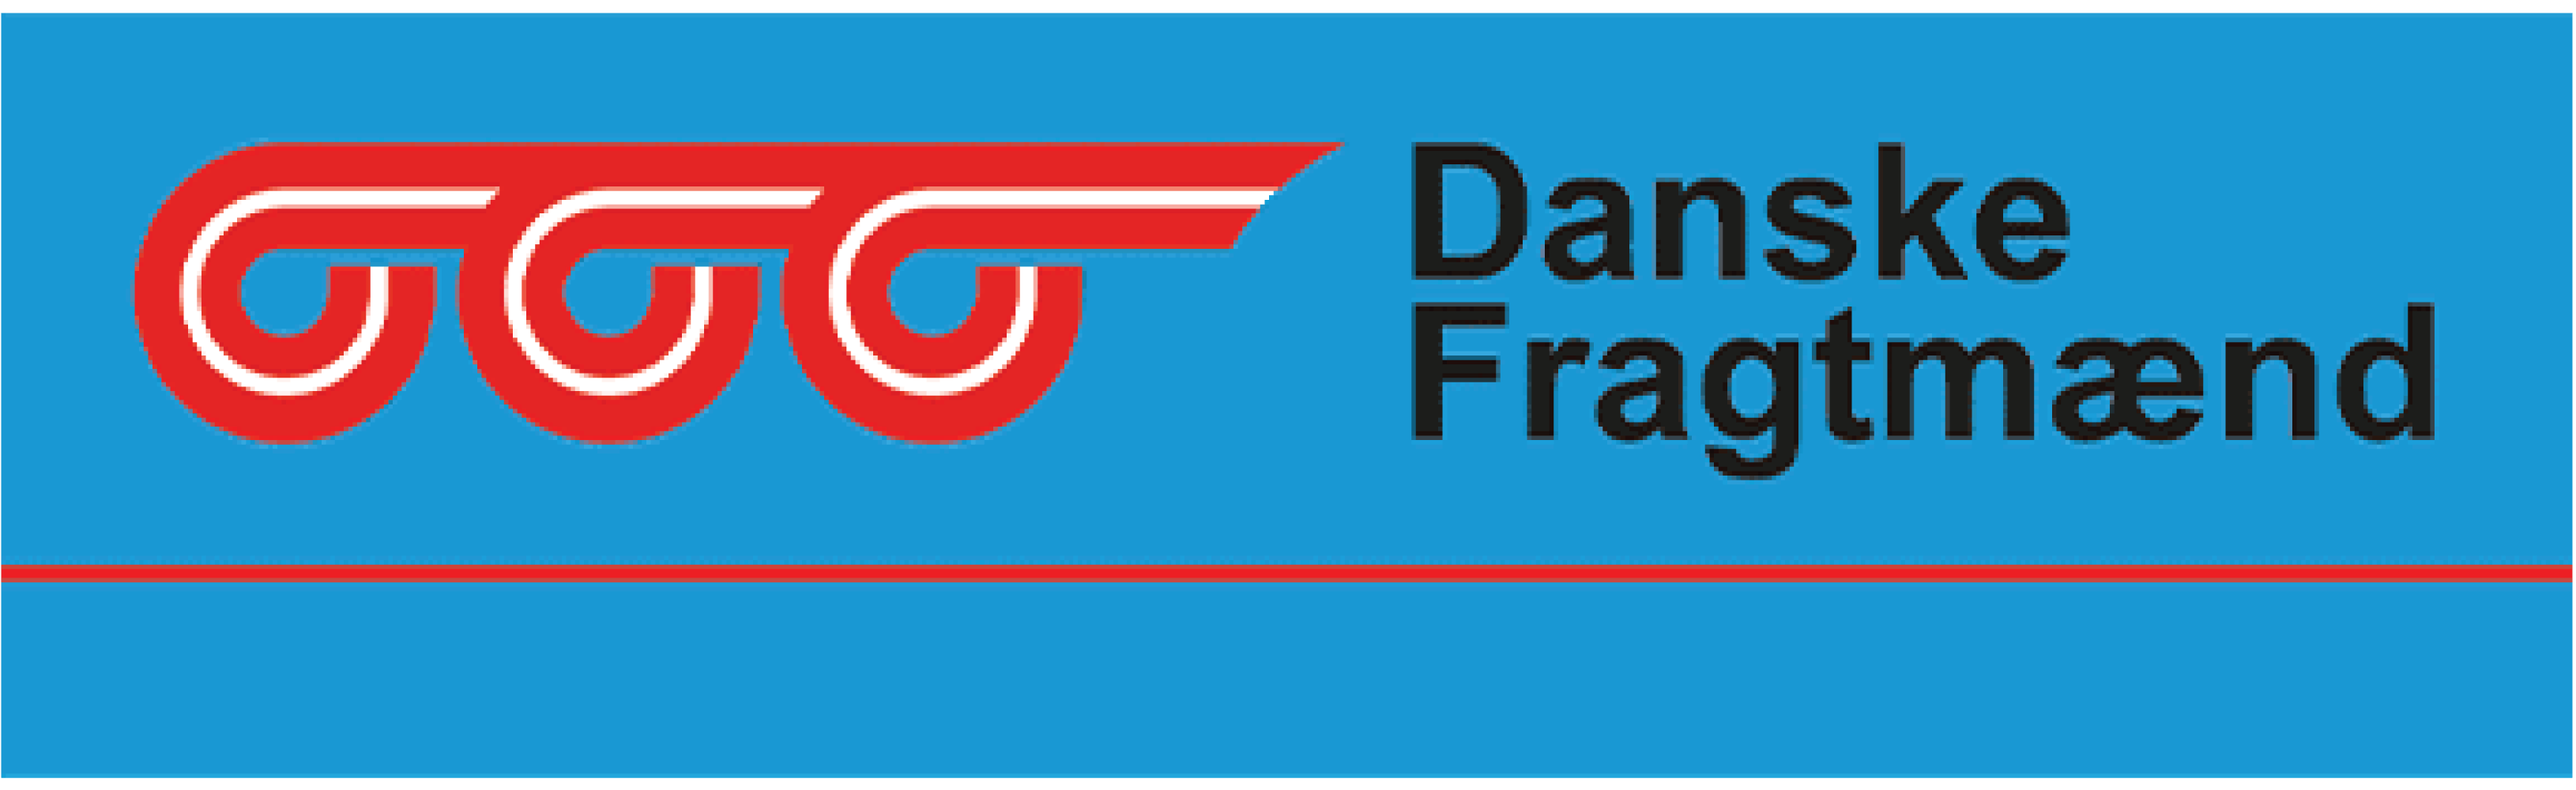 Danske Fragtmaend, Denmark, logo